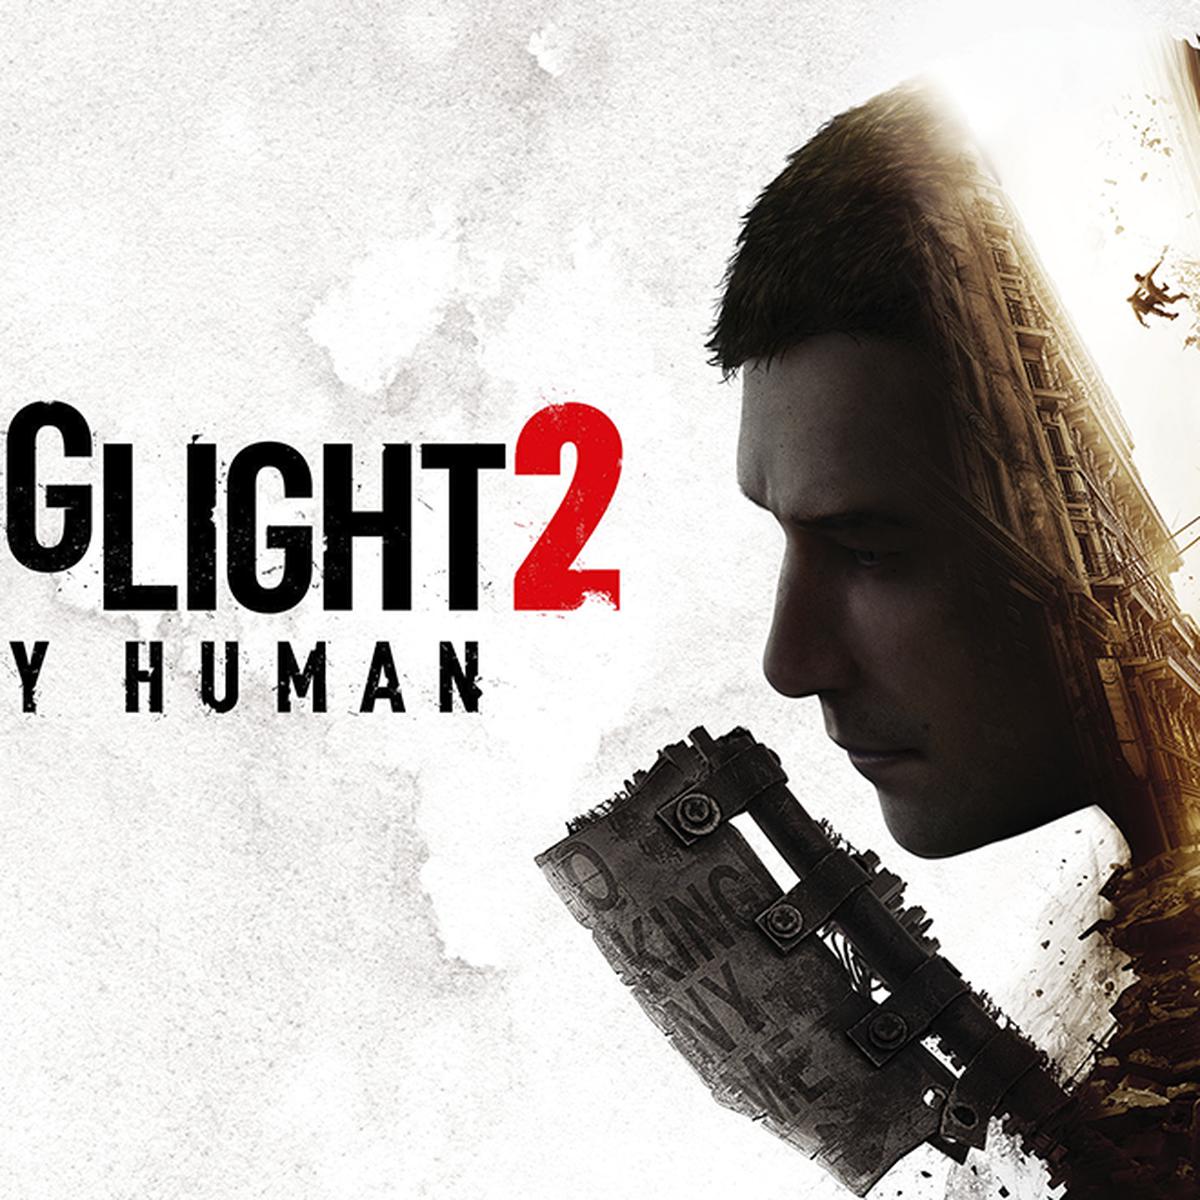 Dying Light 2 tendrá parches en PC, PS5 y Xbox Series X, S la próxima semana